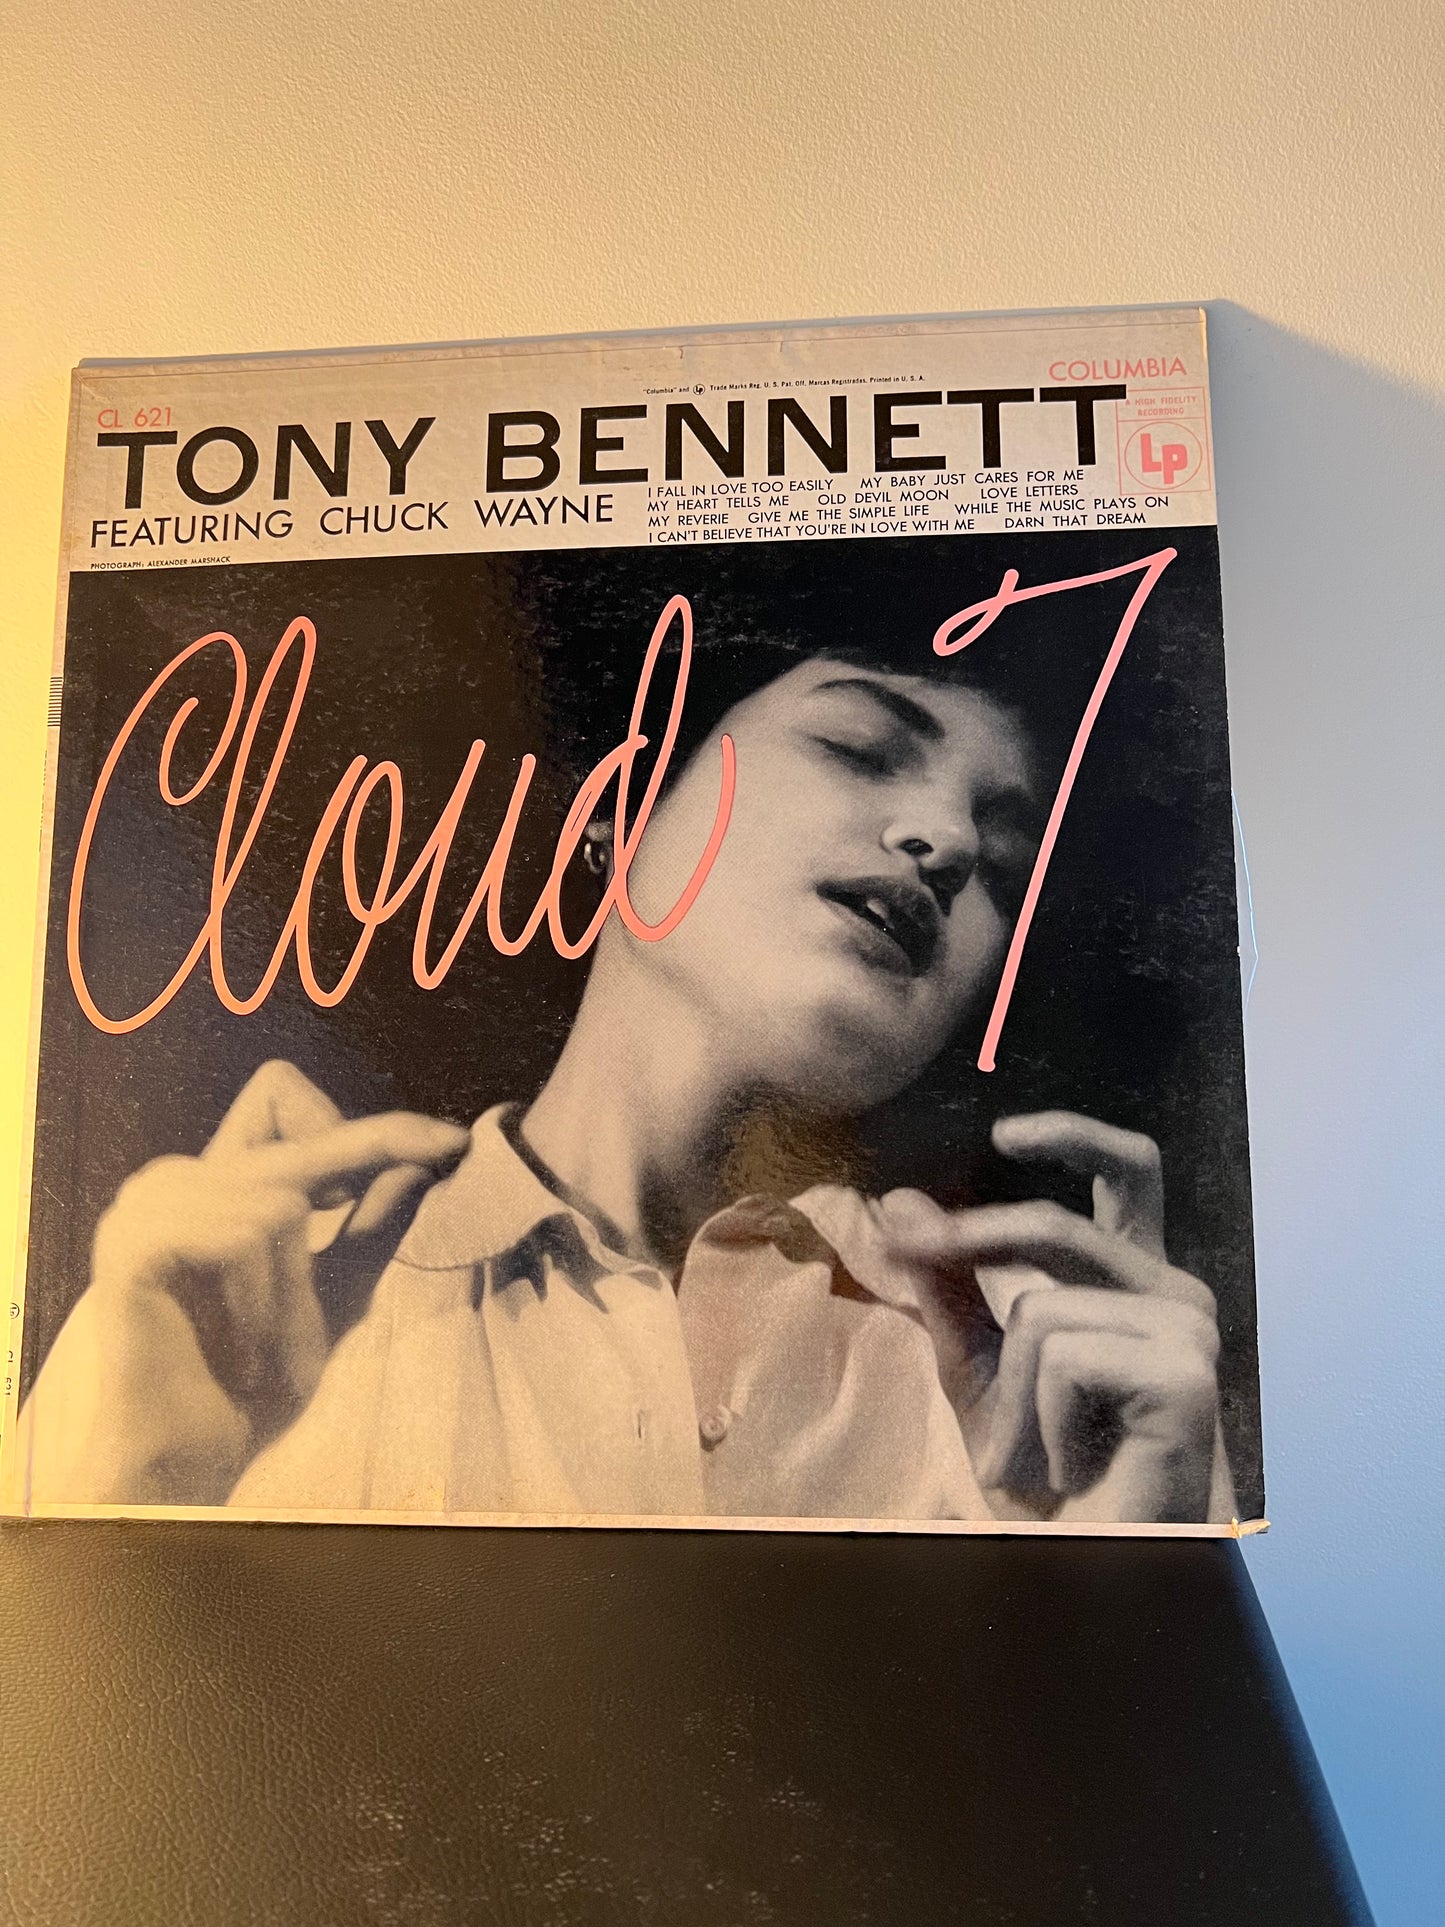 Tony Bennett Featuring Chuck Wayne 1955 Cloud 7 33 RPM Vinyl Columbia #CL 621 LP